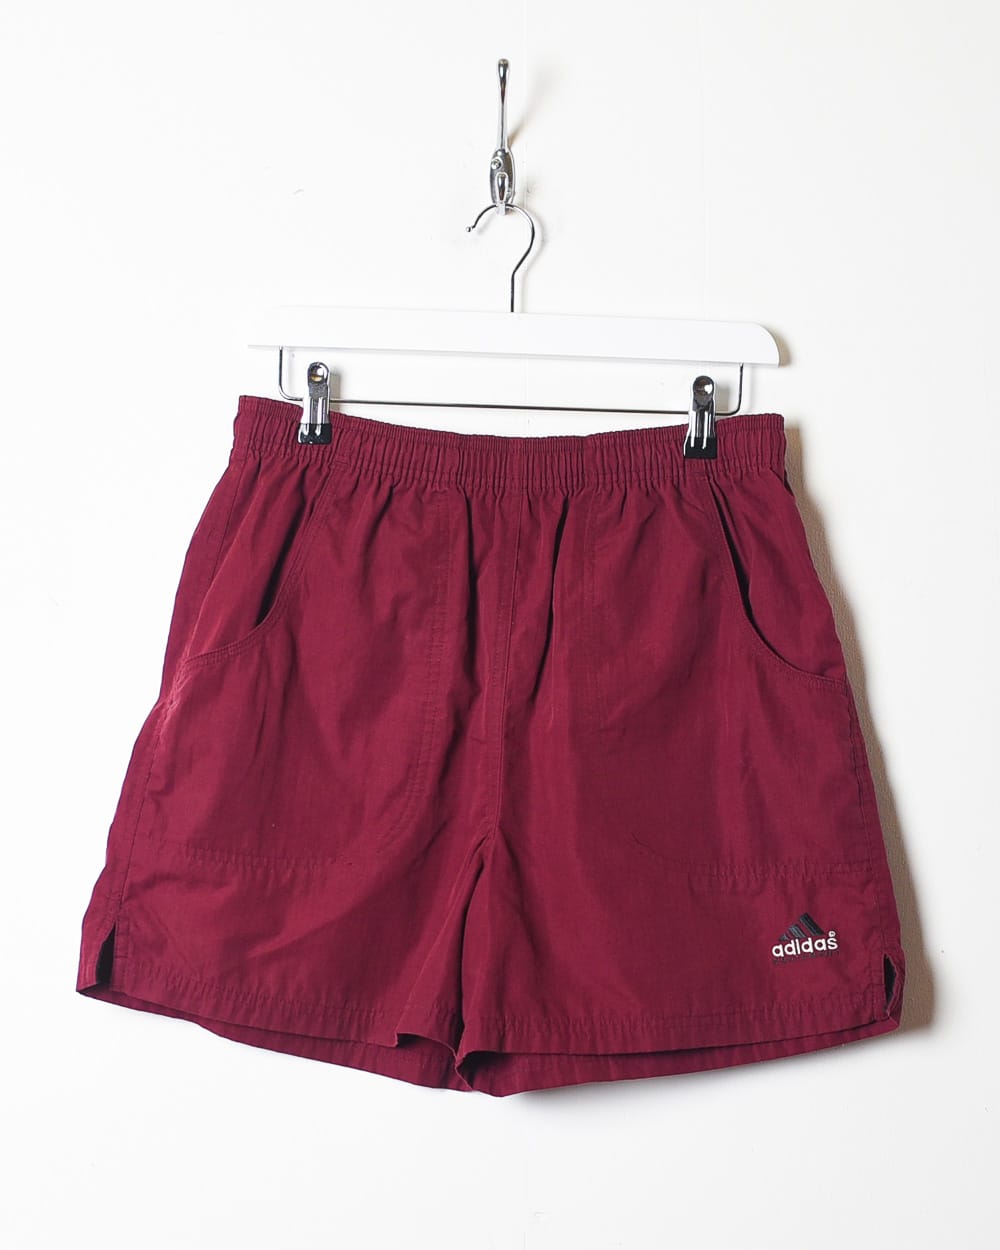 Maroon Adidas Equipment Shorts - Medium